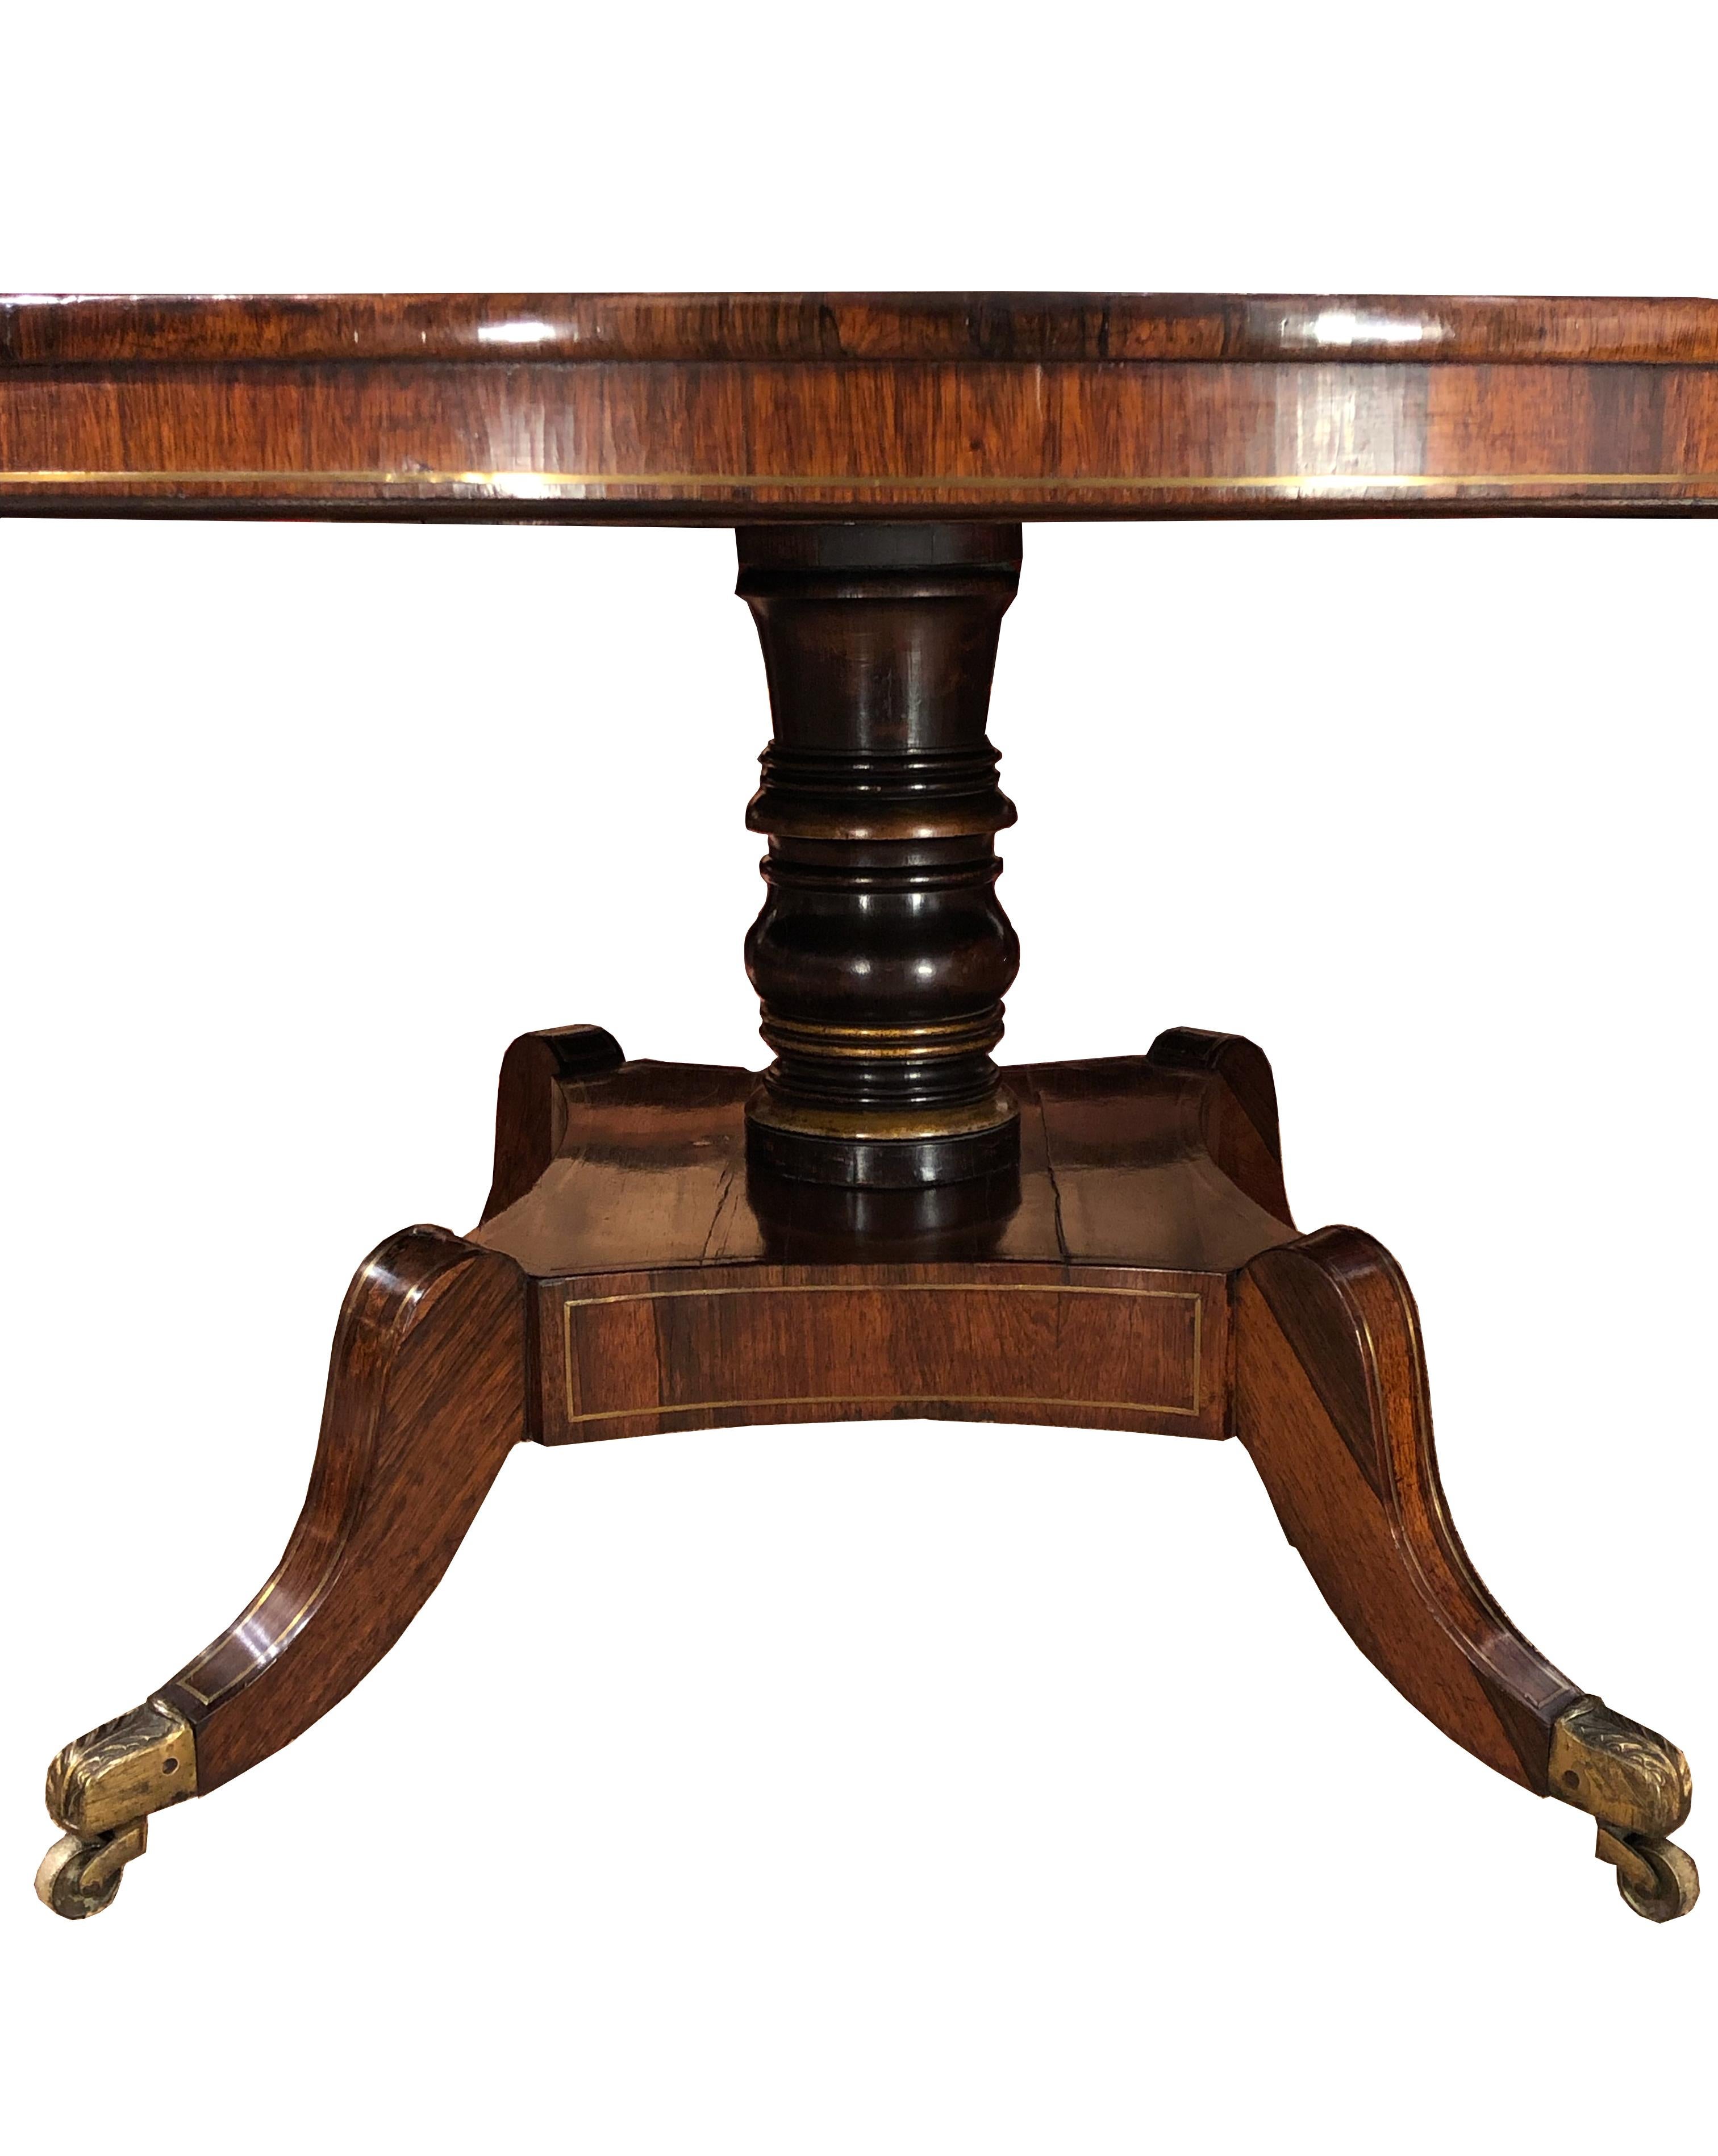 Inlay English Regency Period Rosewood Tilt-Top Table